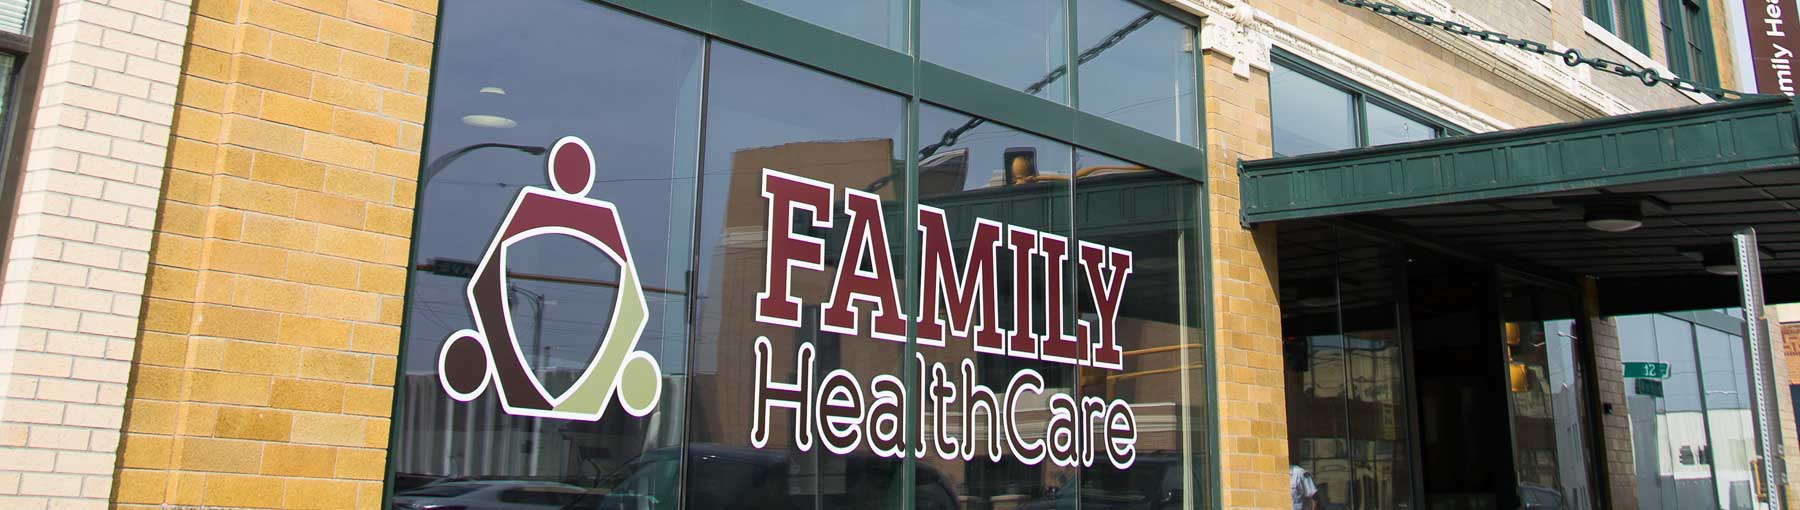 Family Healthcare Fargo Nd